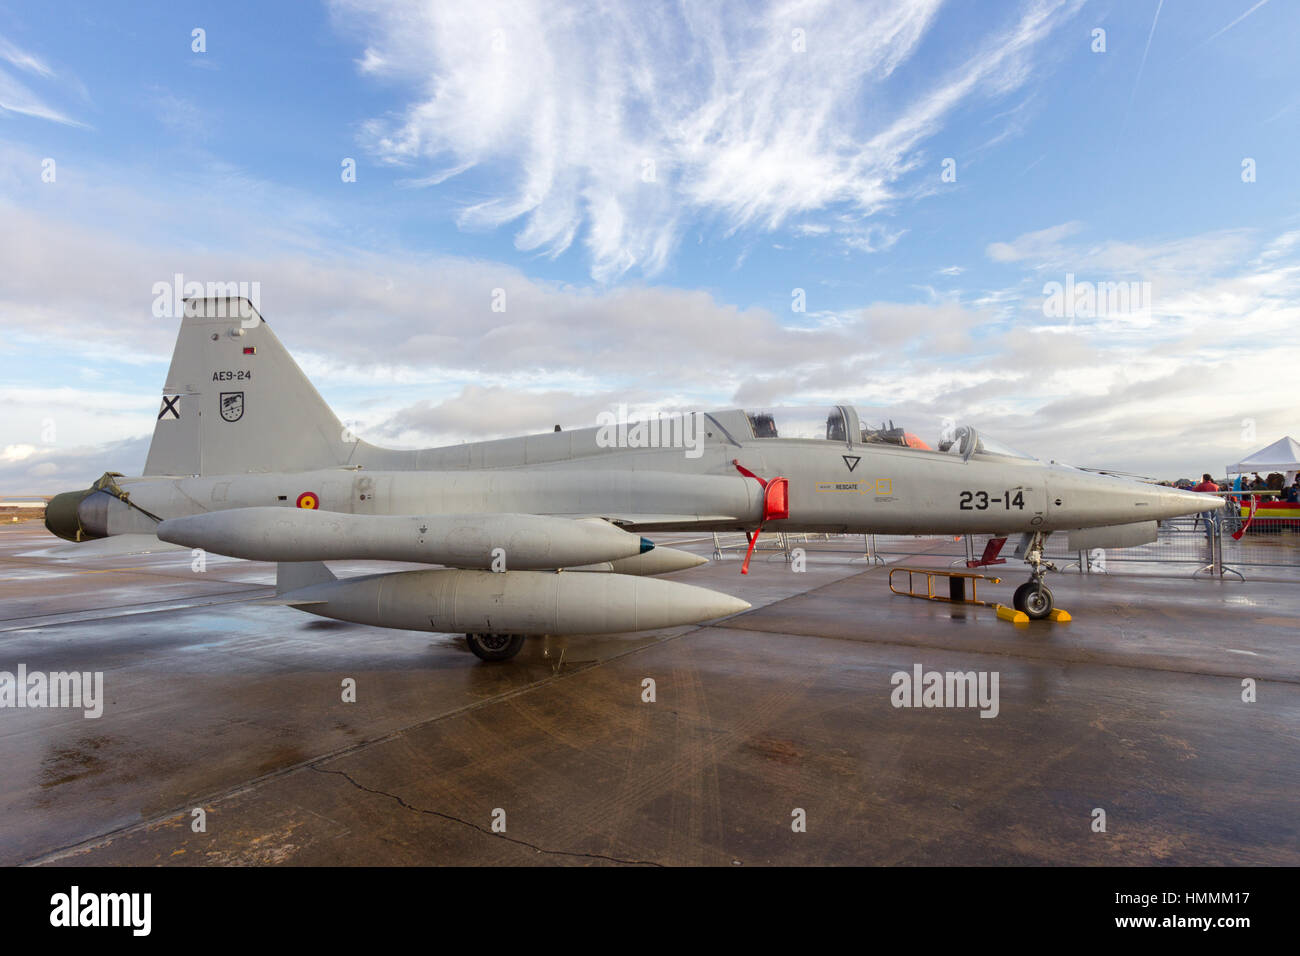 TORREJON, SPAIN - OCT 11, 2014: Spanish F-5 Tiger fighter jet on the tarmac of Torrejon airbase. Stock Photo